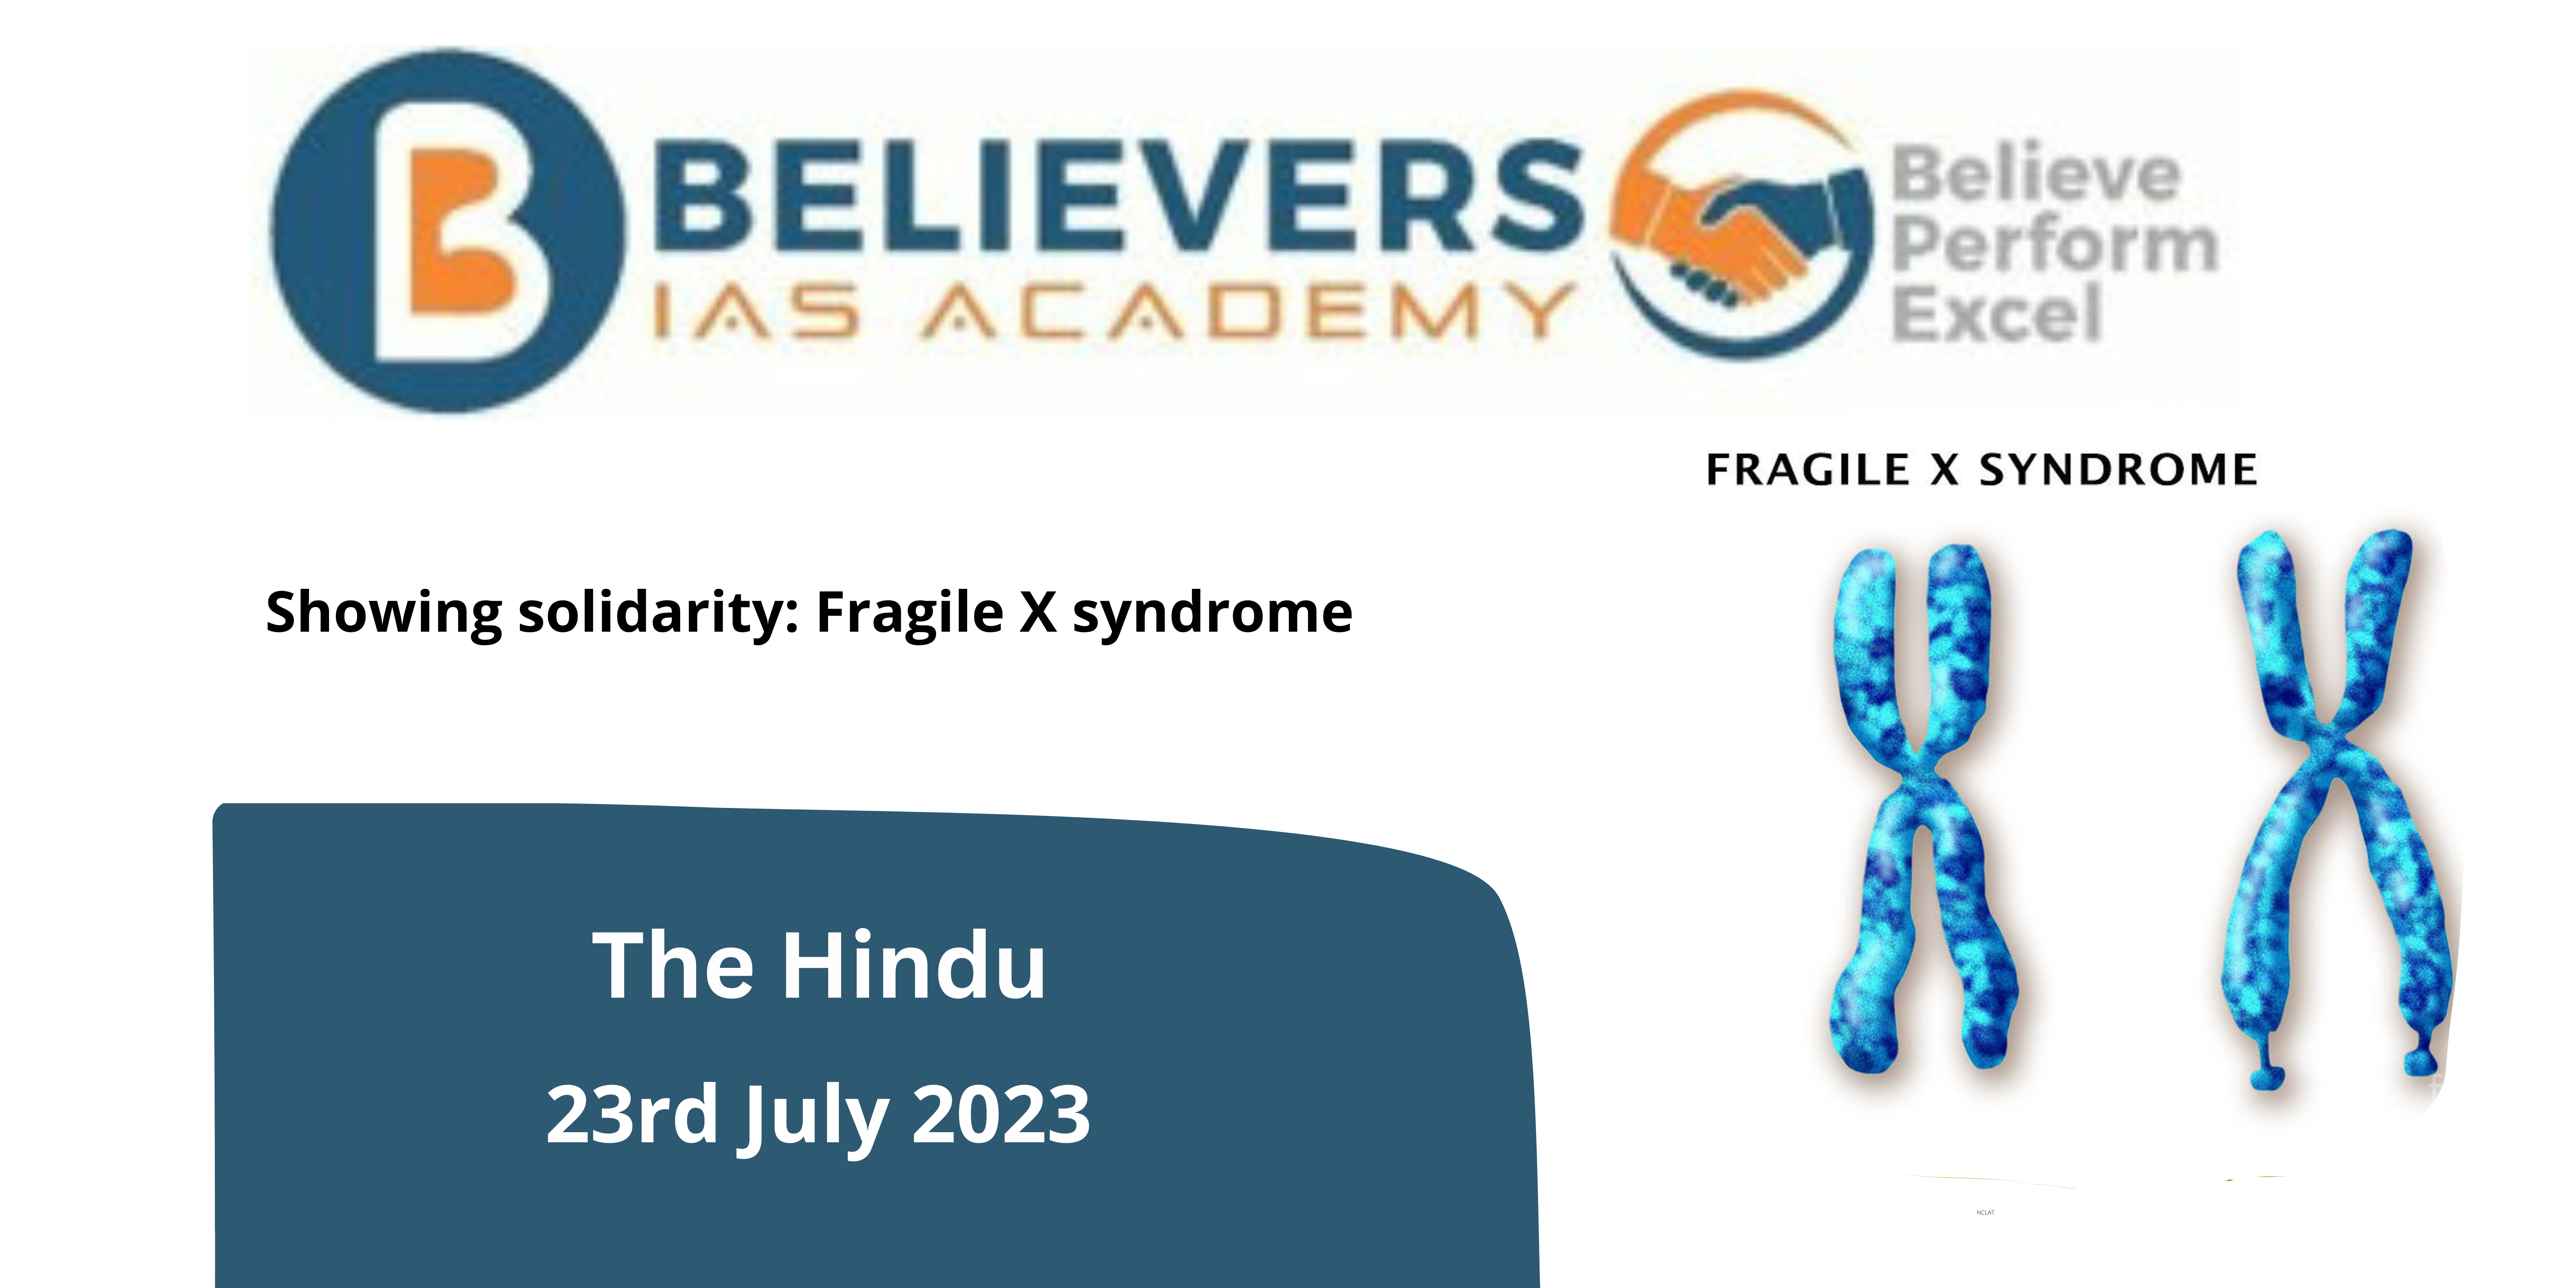 World Fragile X Awareness Day 2022: 22 July